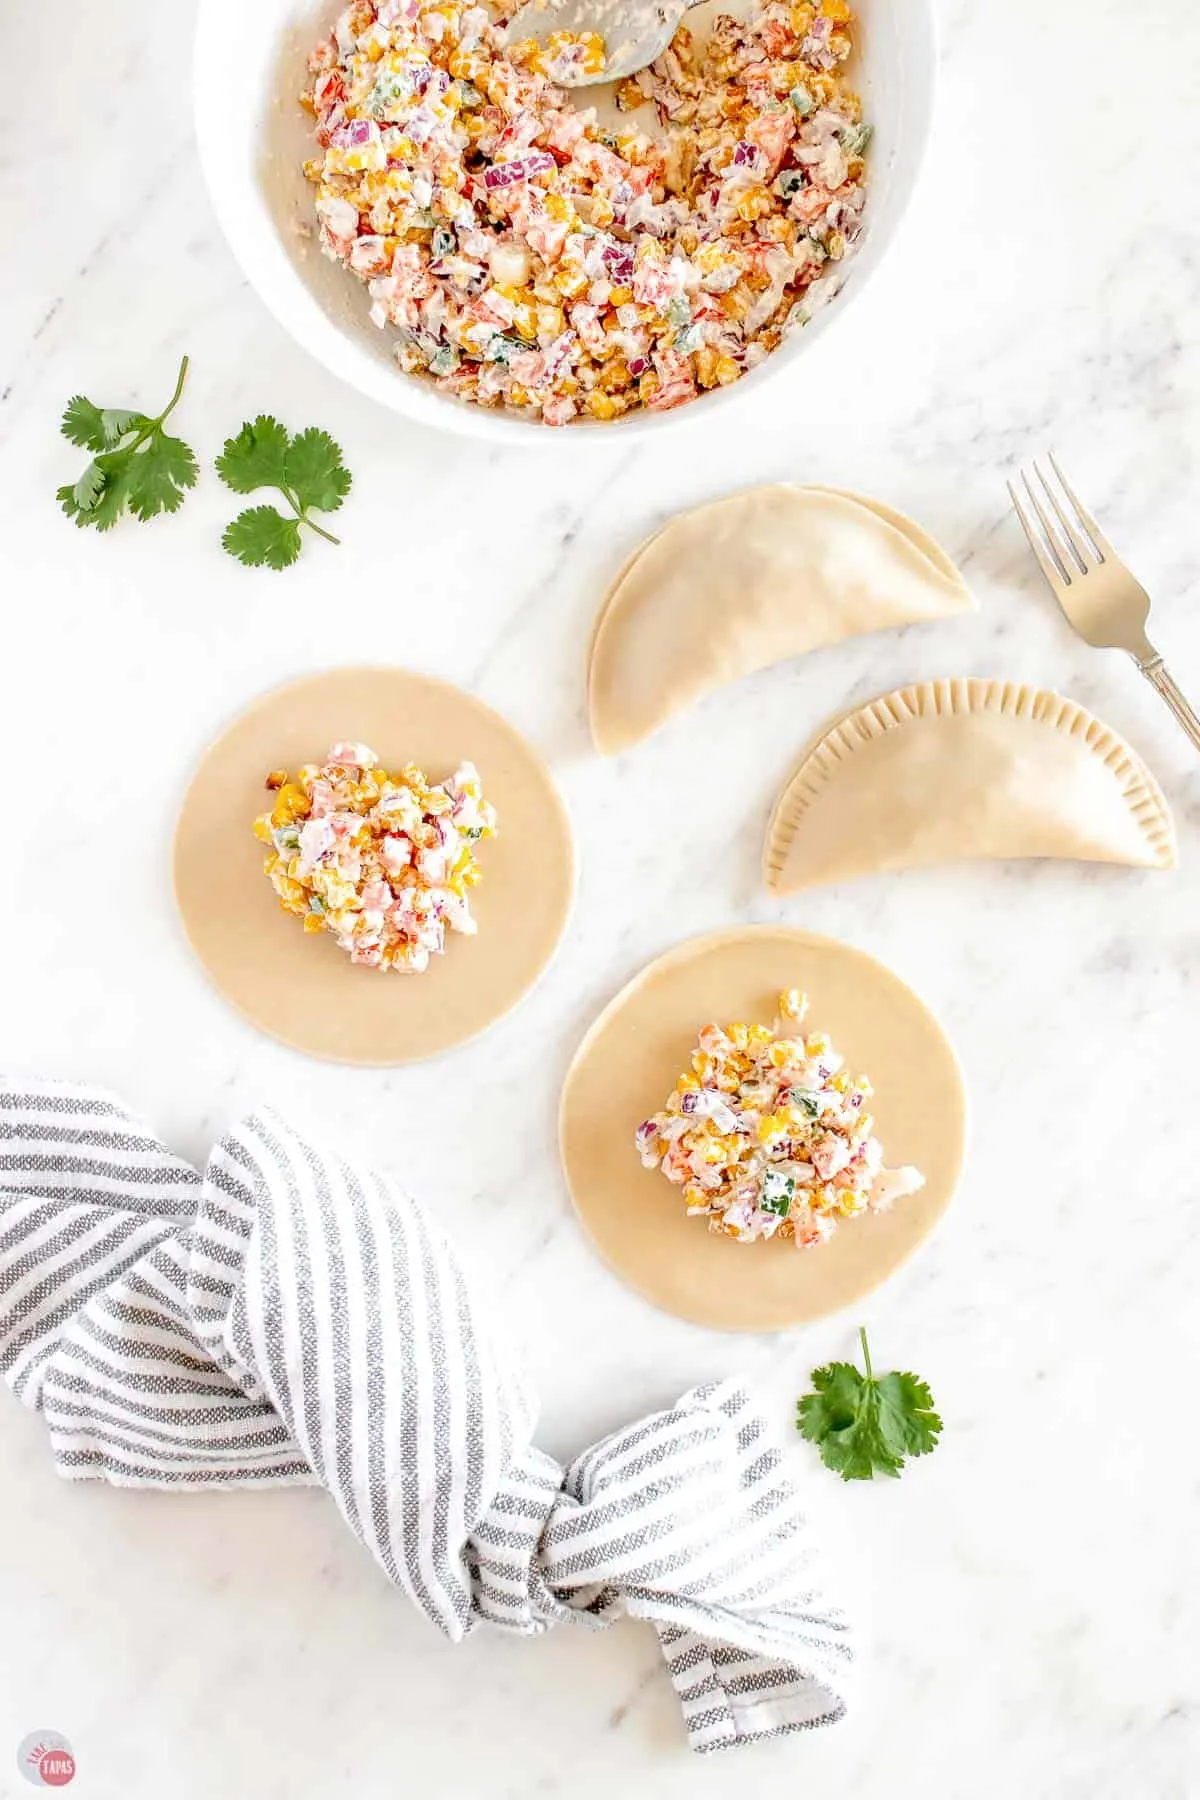 corn salad on empanada dough discs